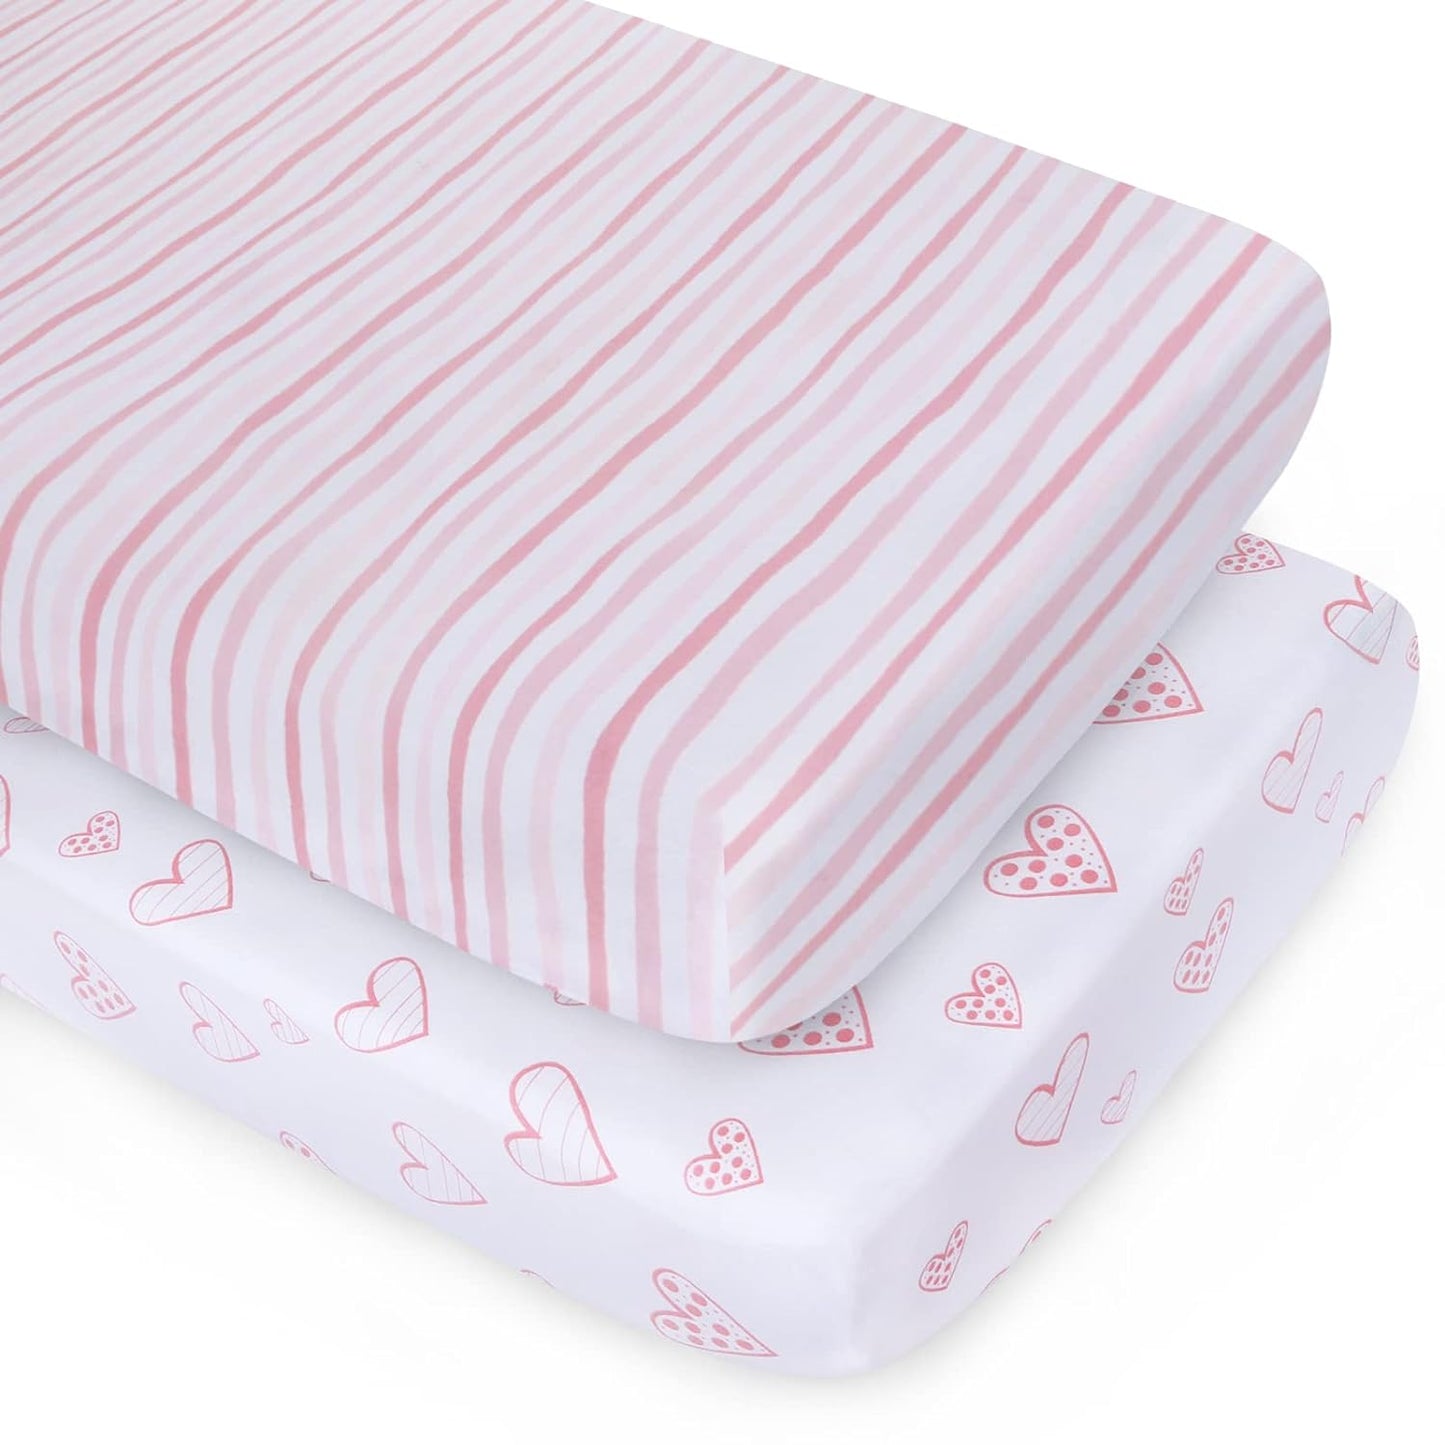 Crib Sheet - 2 Pack, 100% Jersey Cotton, Pink & White (for Standard Crib)